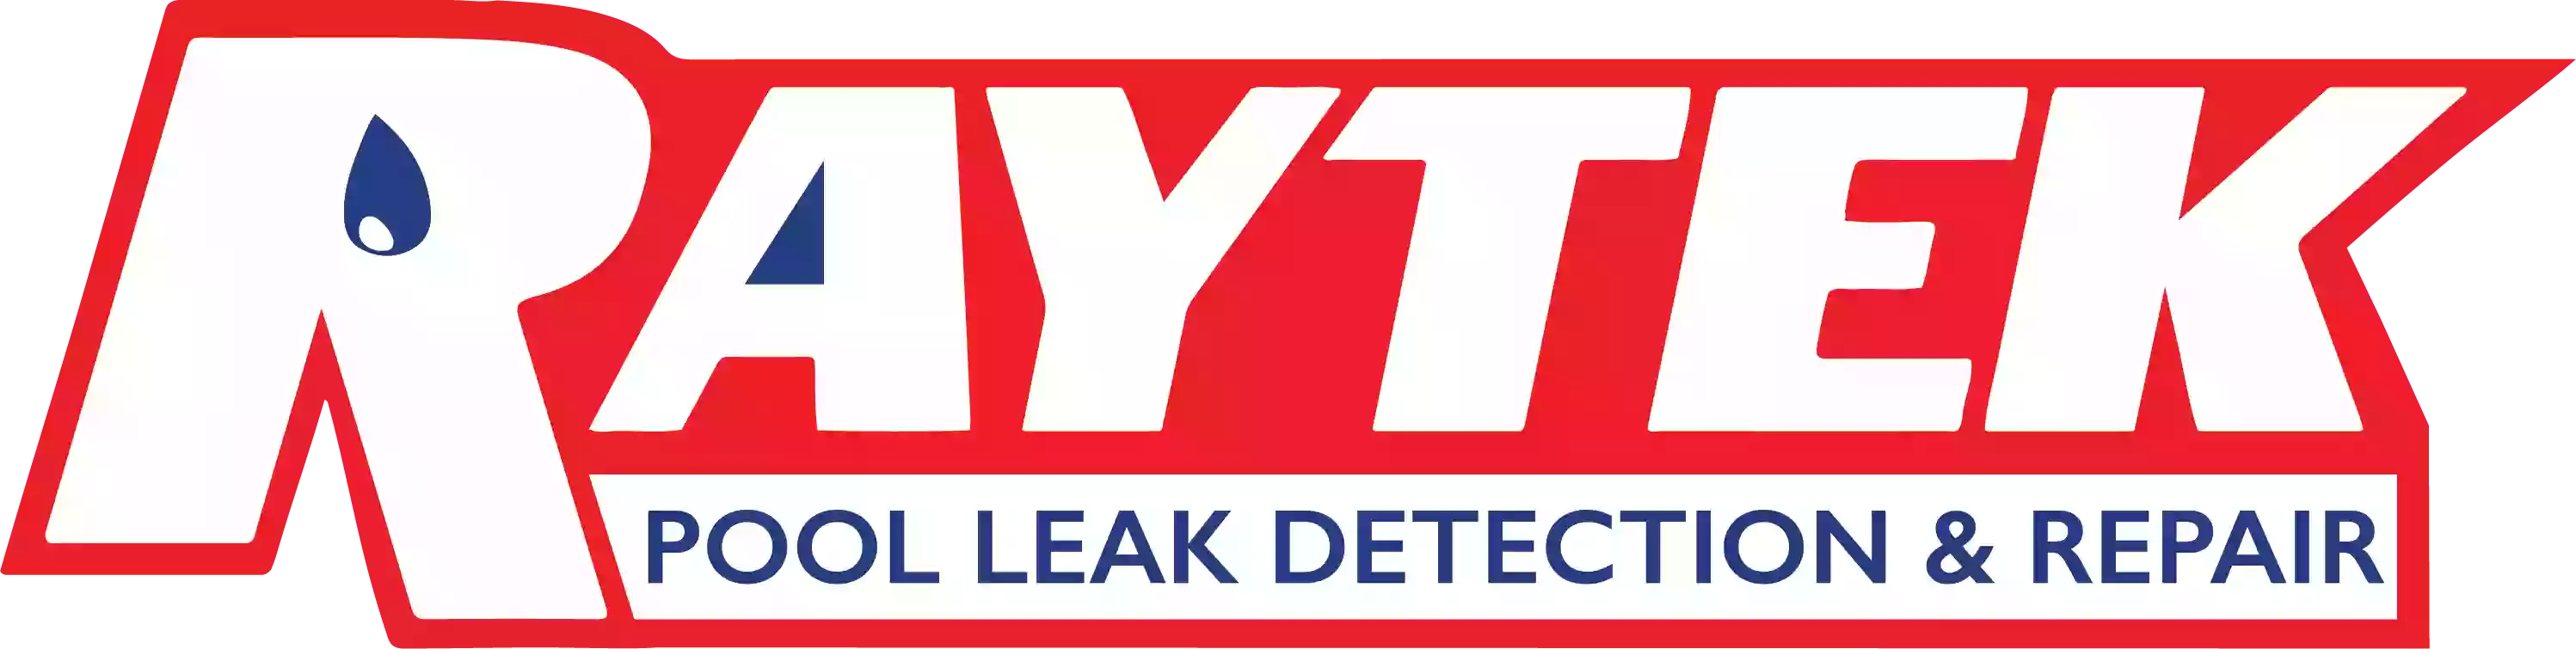 Raytek Pool Leak Detection & Repair